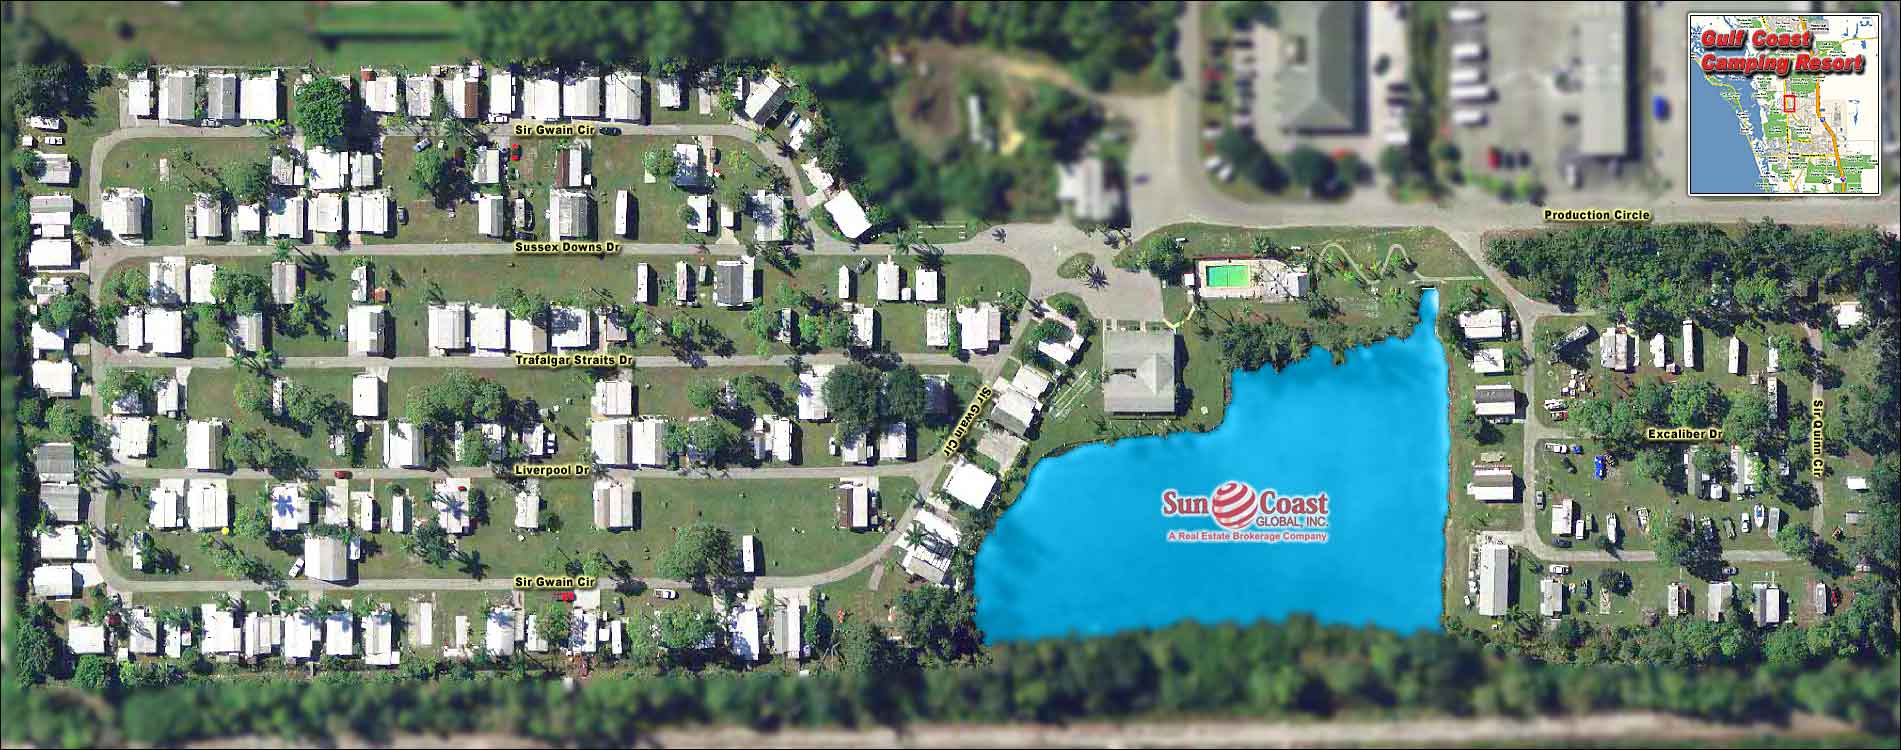 Gulf Coast Camping Resort Overhead Map